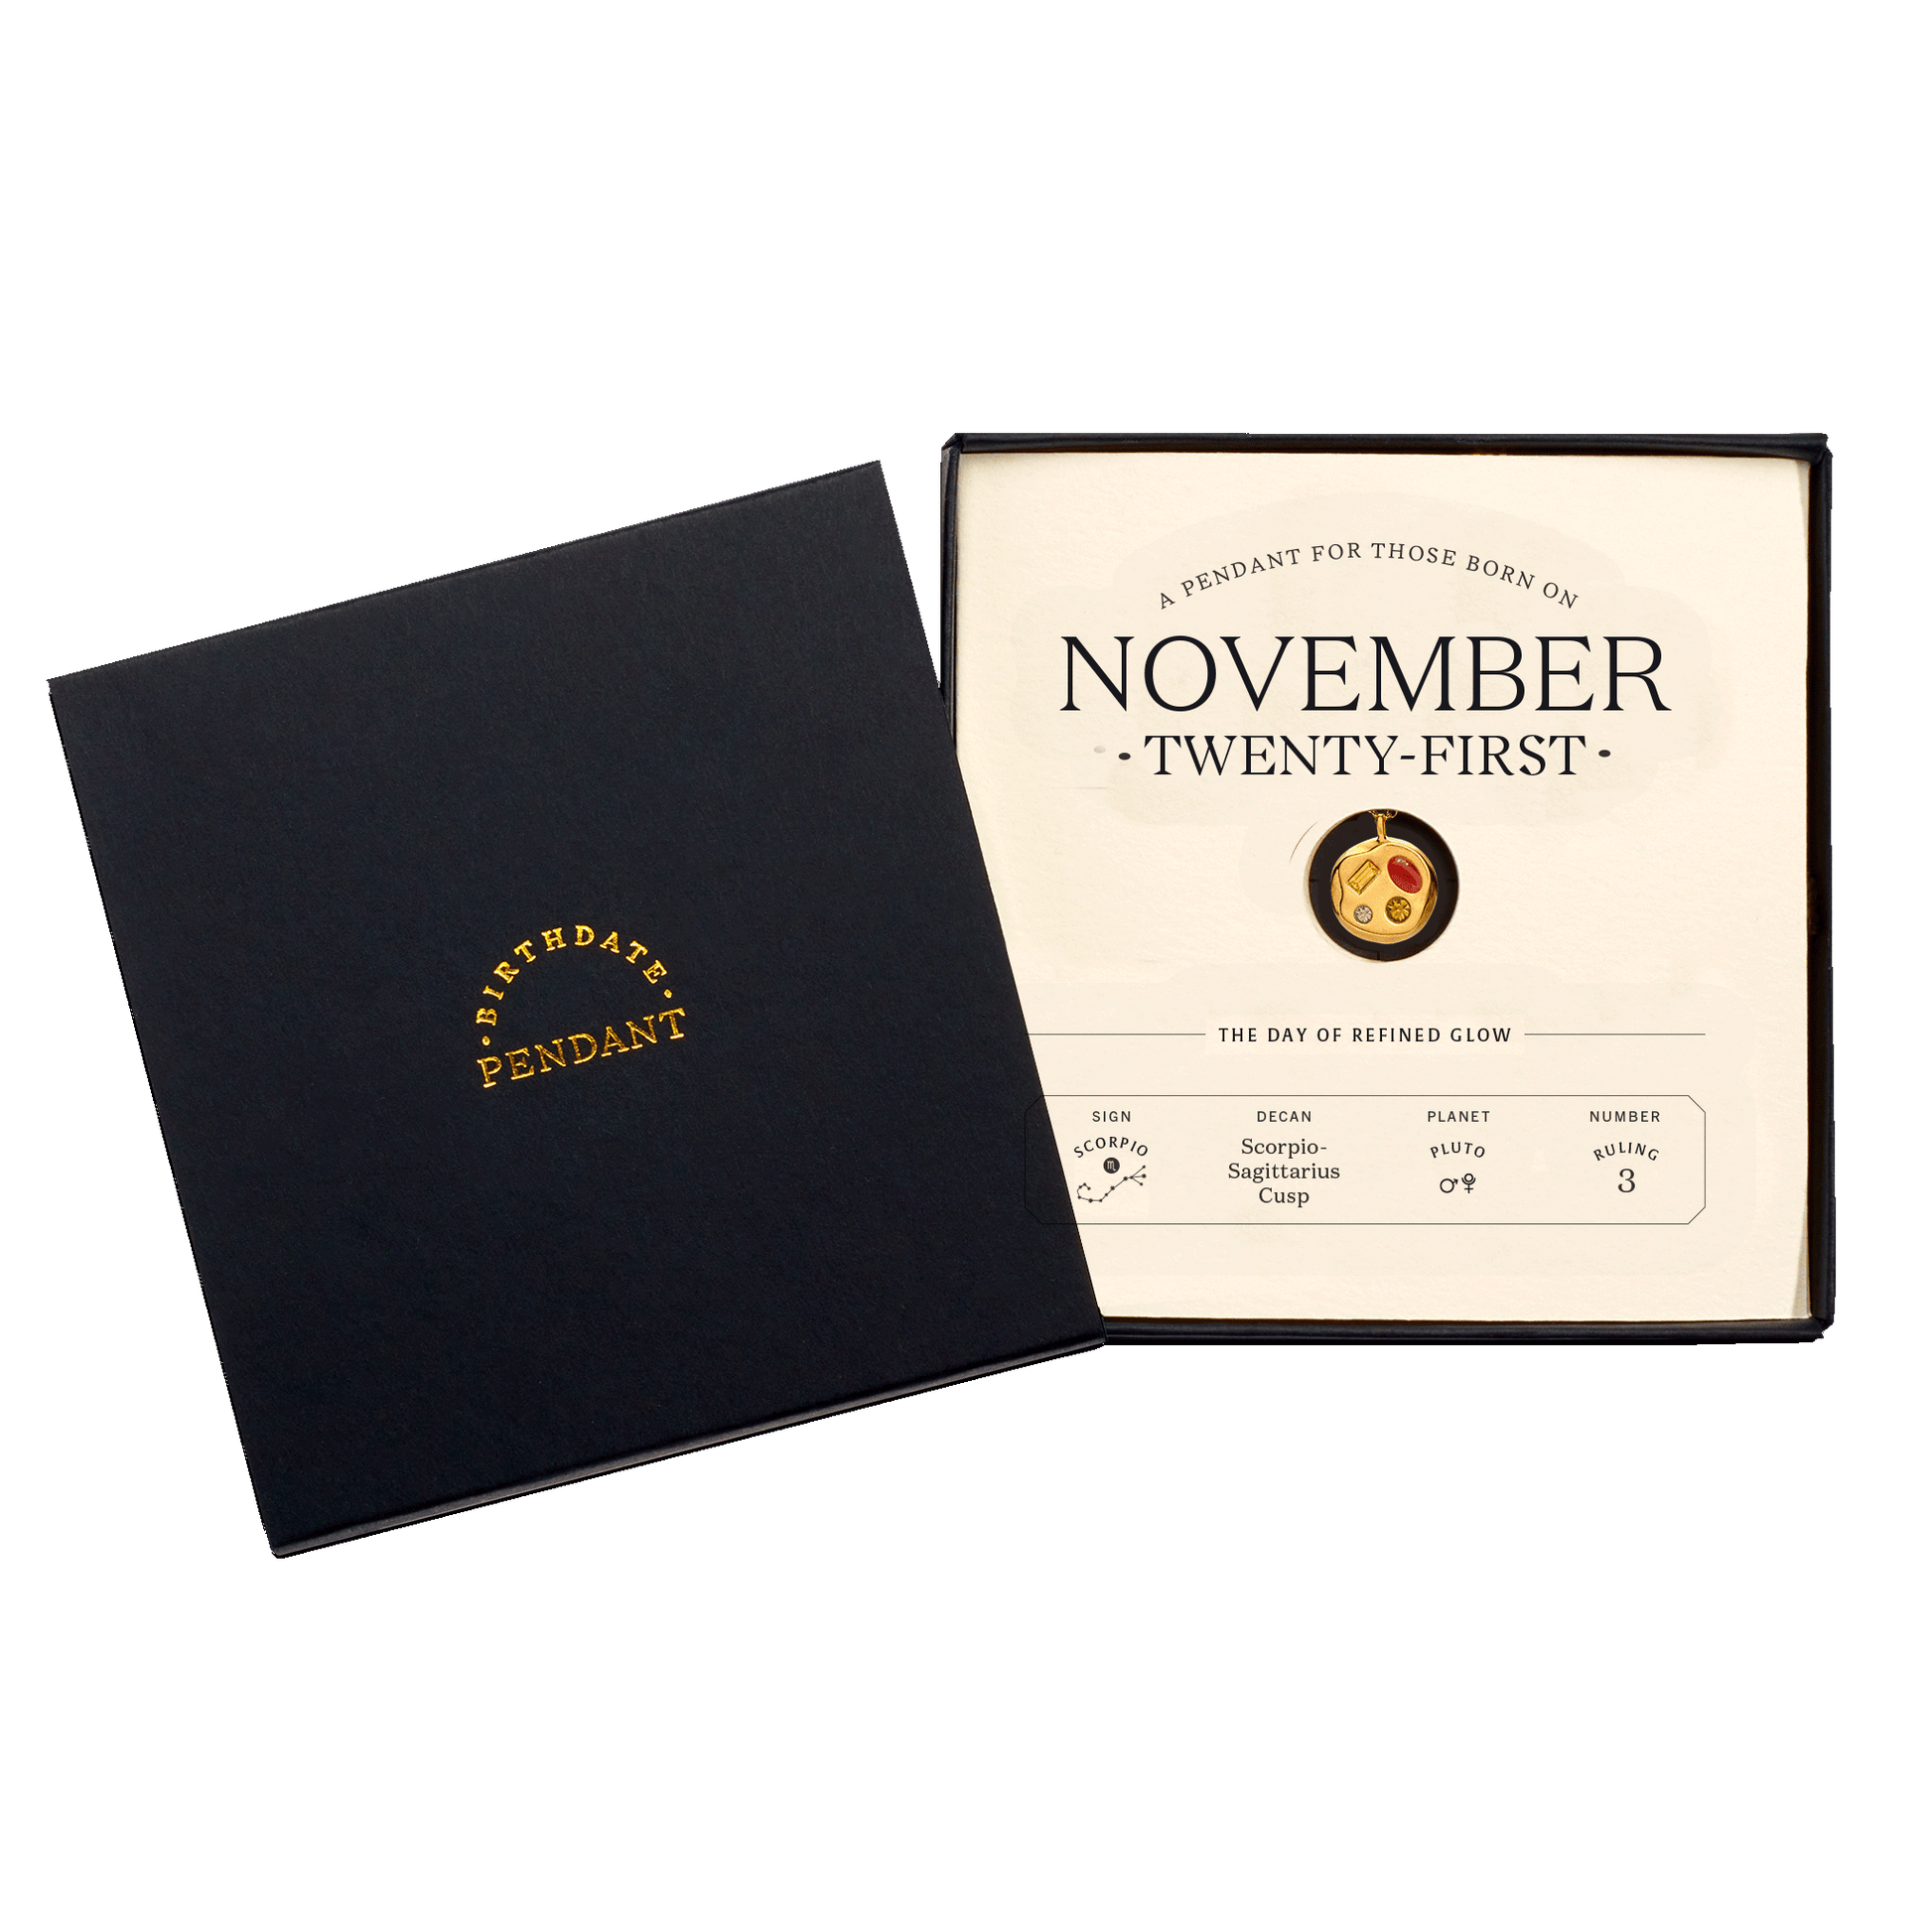 The November Twenty-First Pendant inside its box